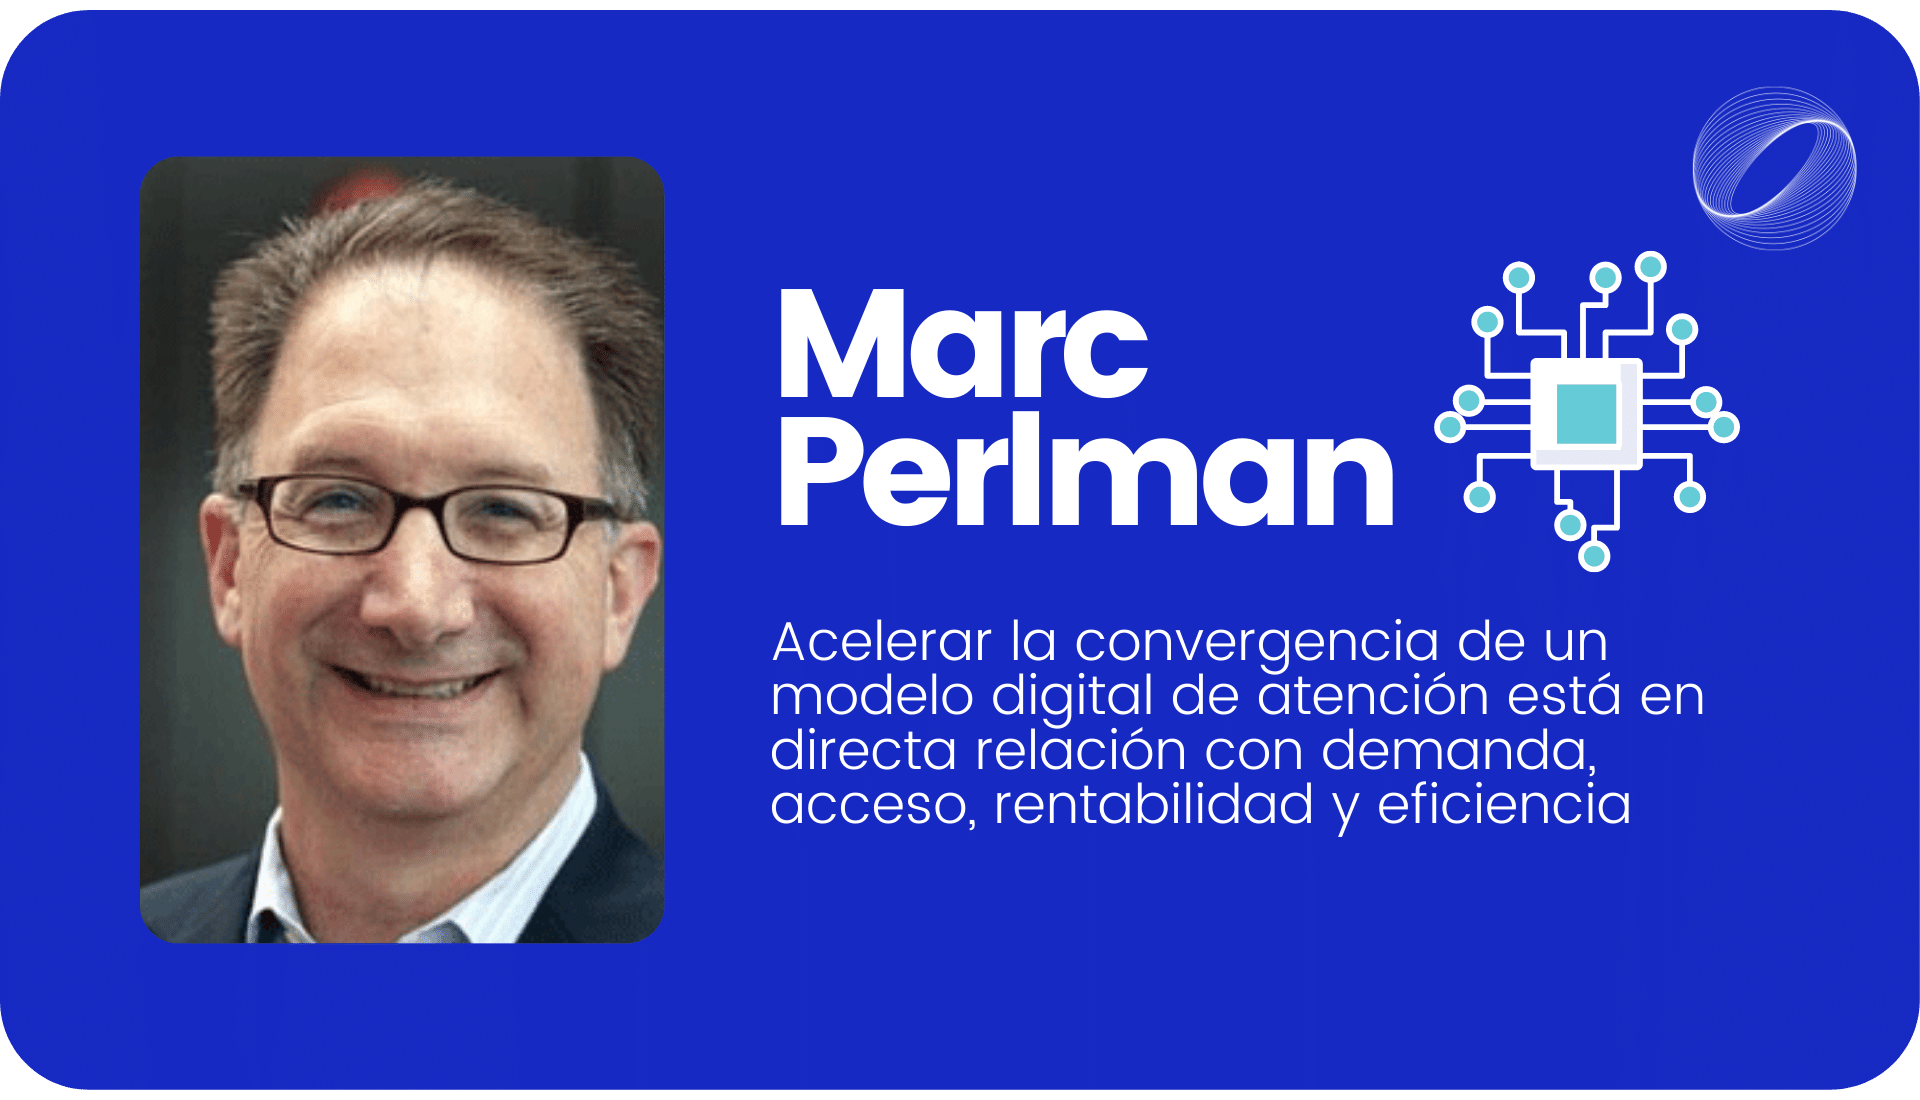 Marc Perlman, líder global en transformación Delloitte